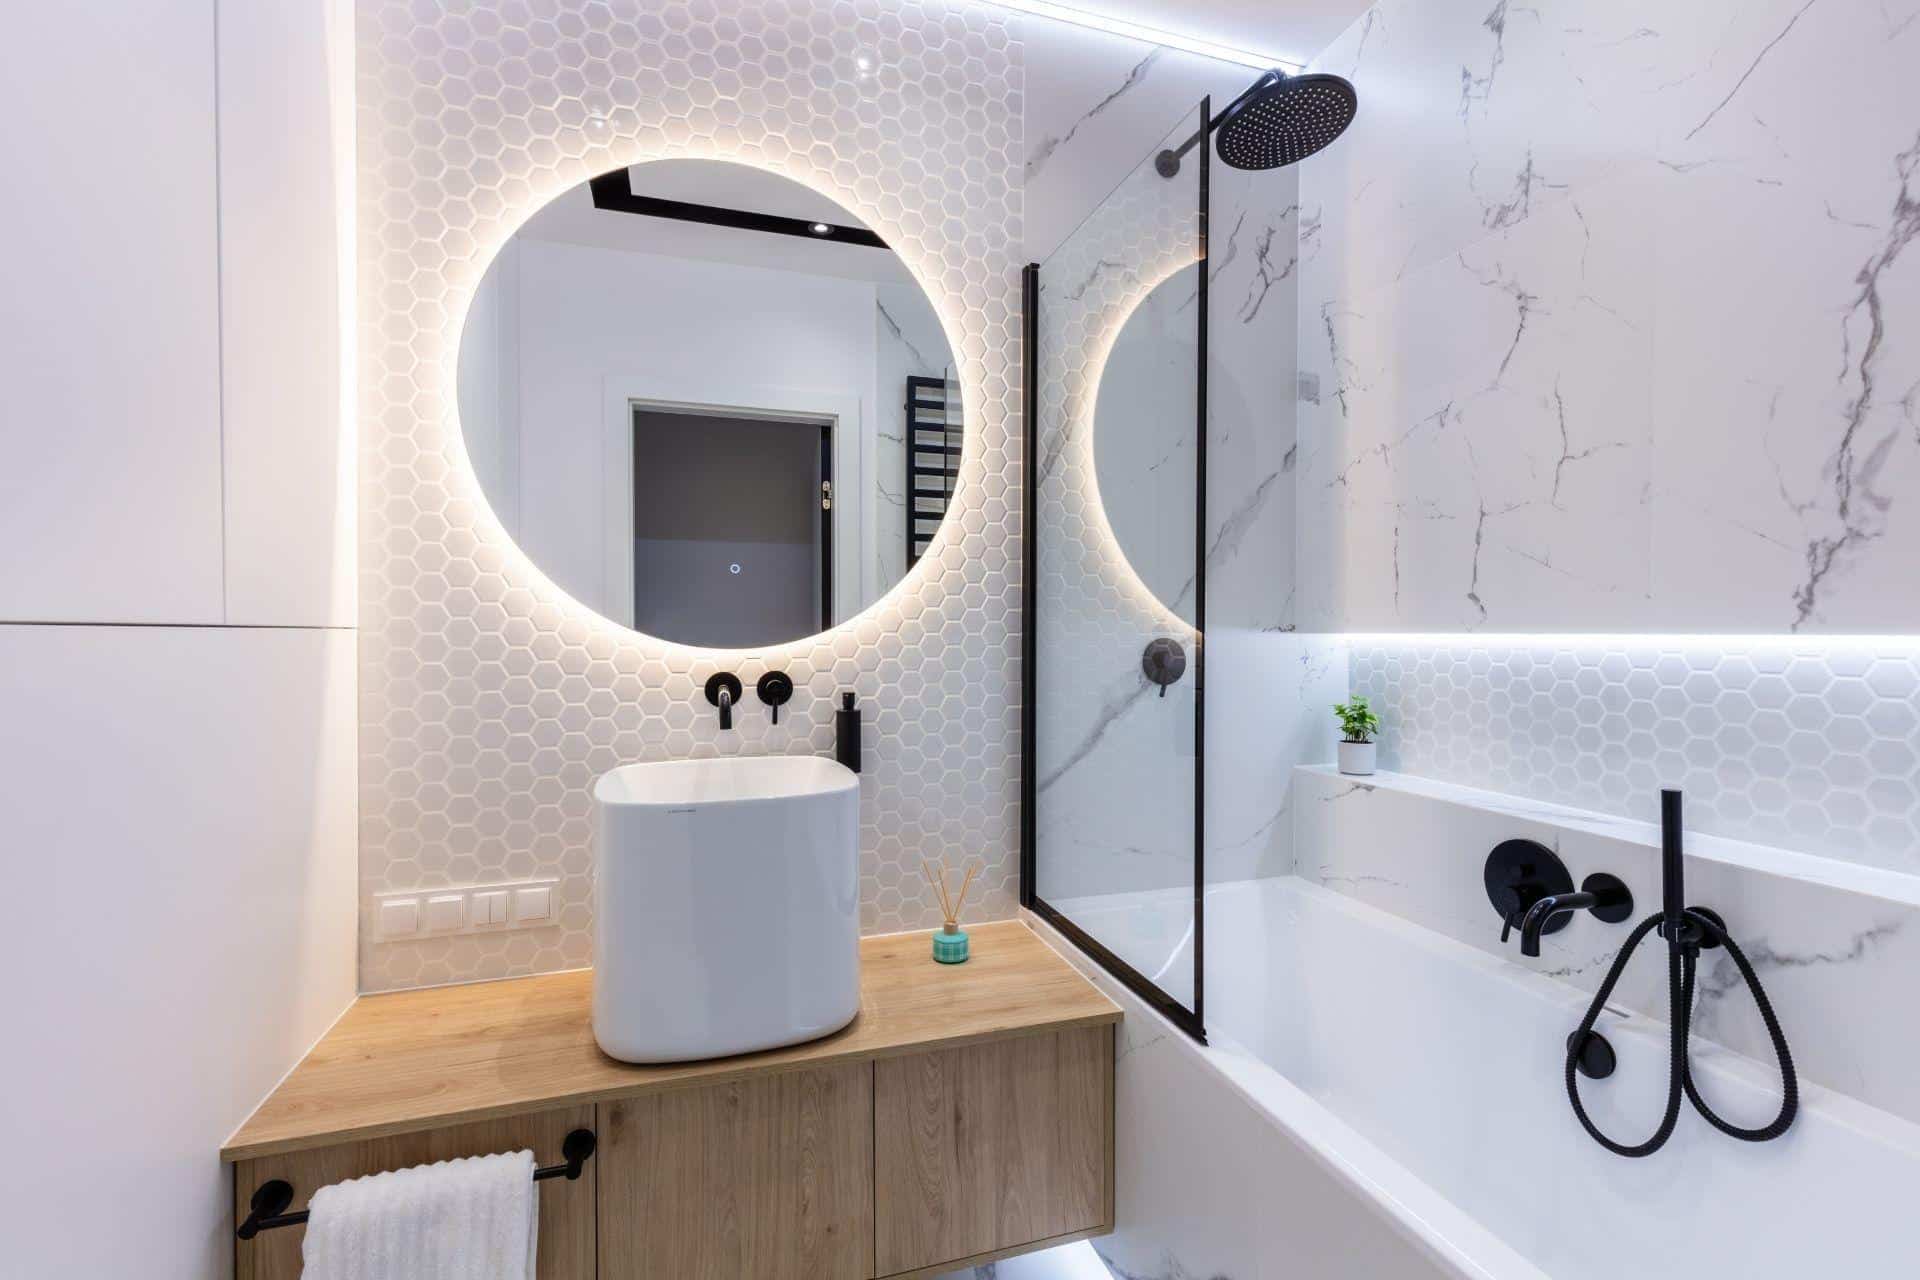 Bathroom Remodel, Vinyl Flooring Vs Ceramic Tile Bathroom